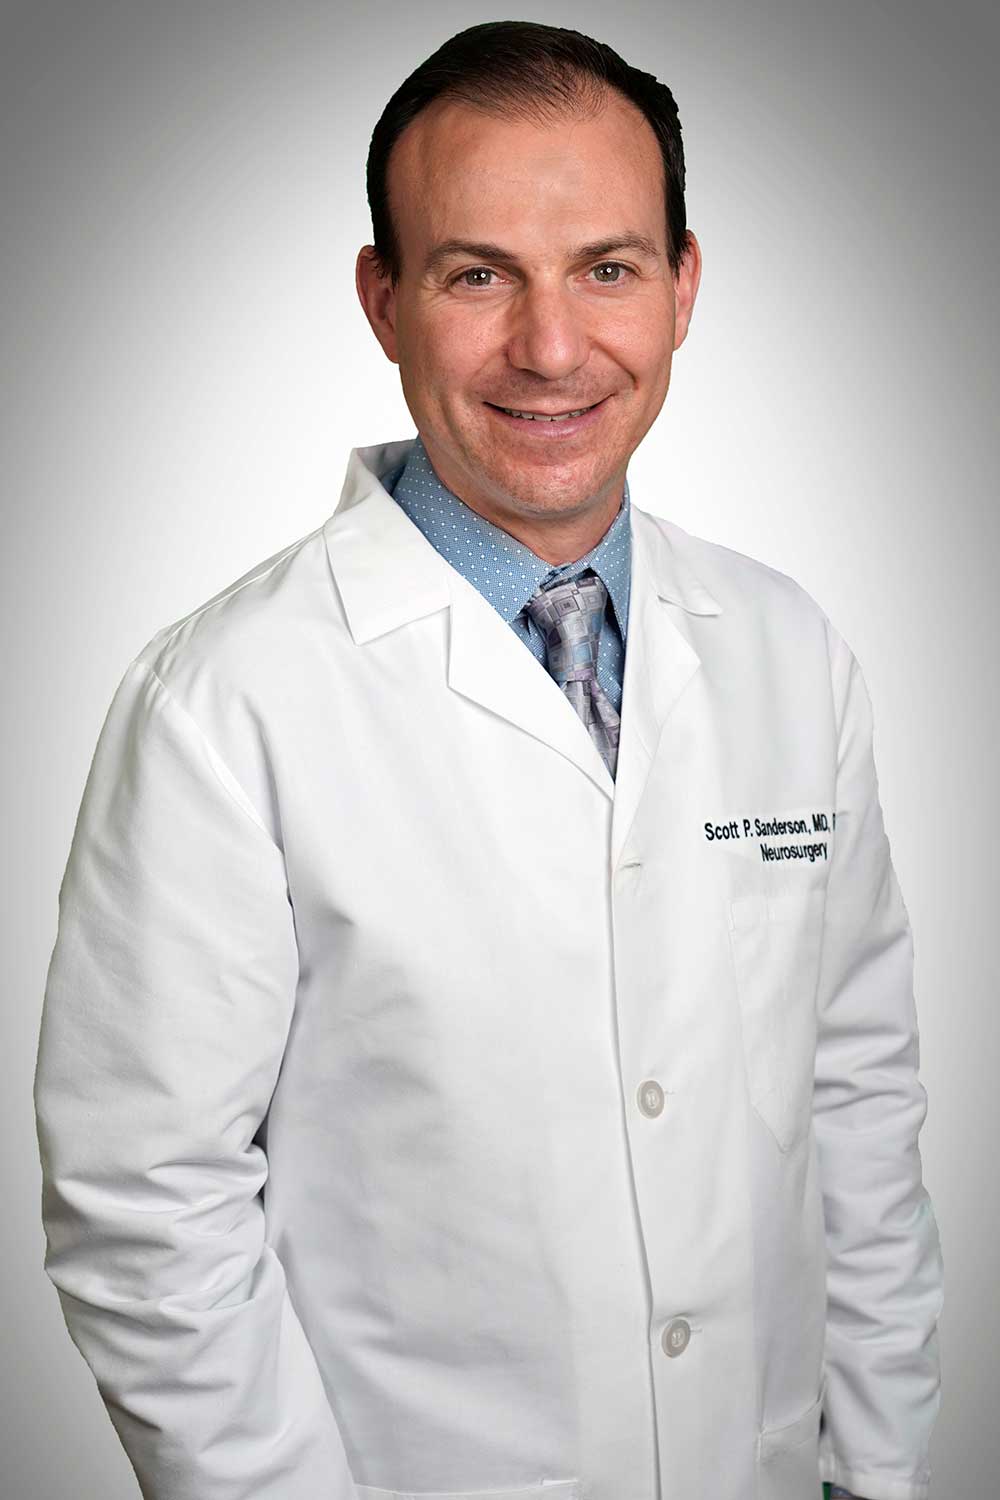 Headshot of chief neurosurgeon Scott Anderson wearing his lab coat and smiling.